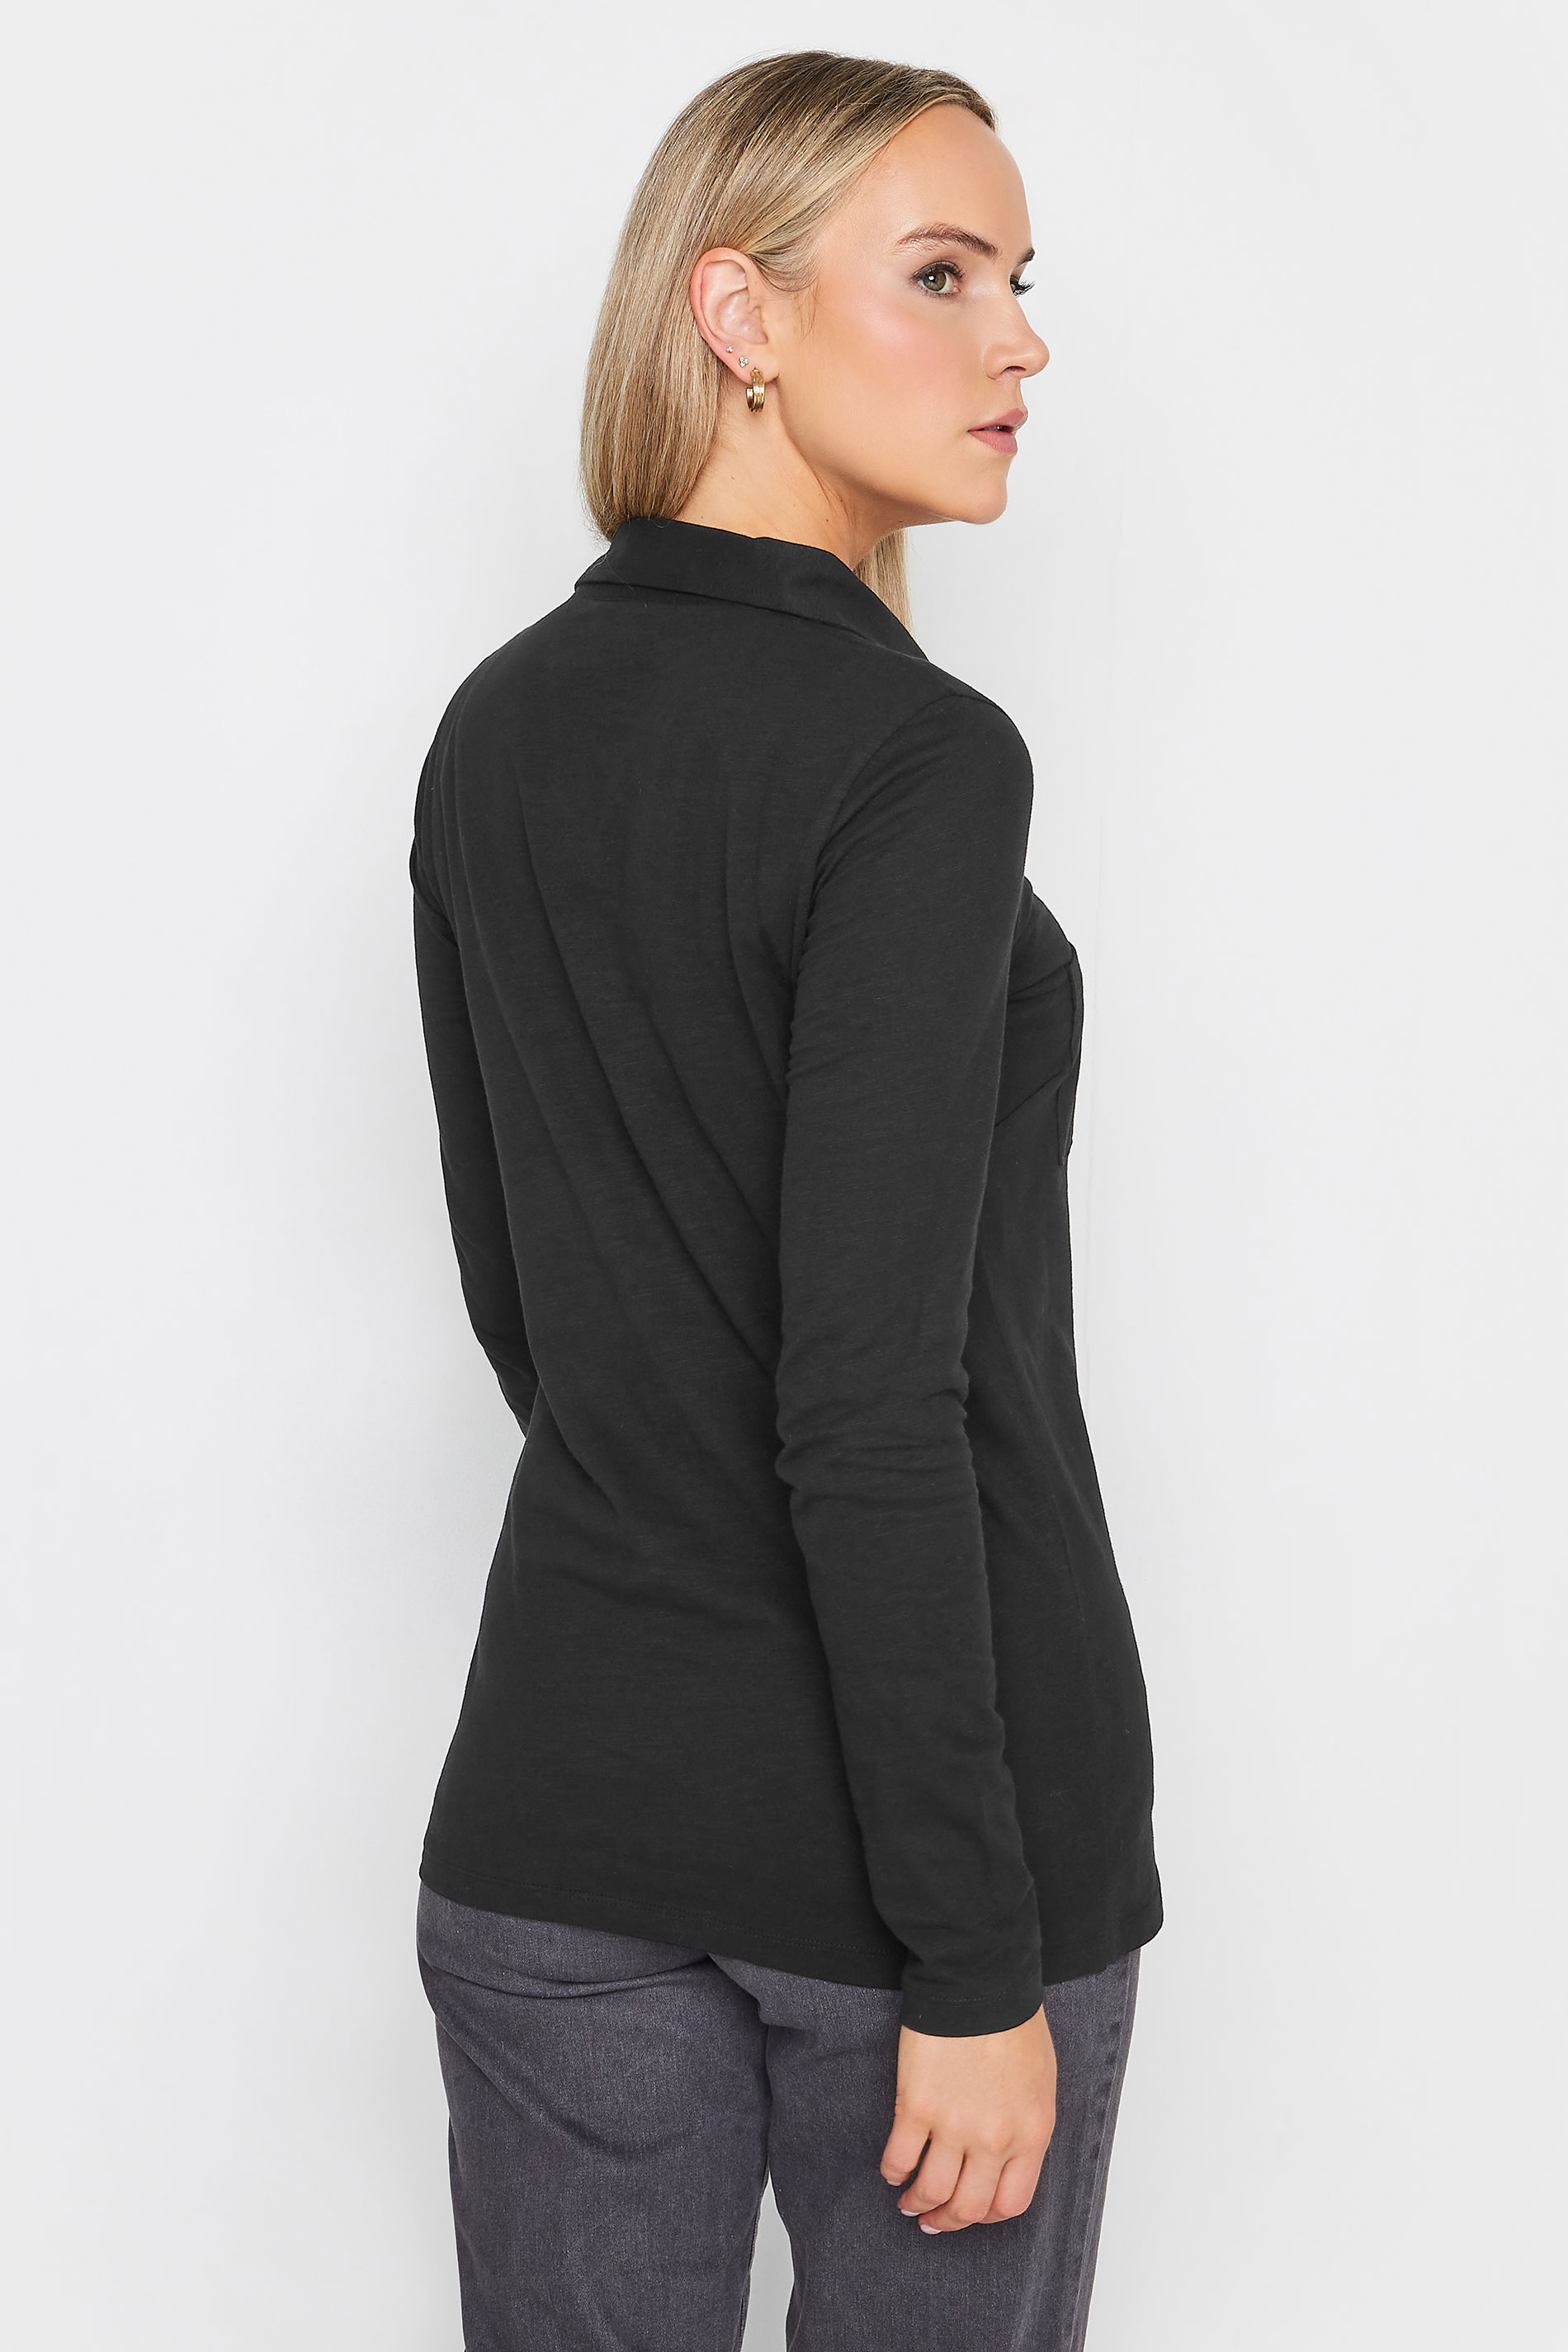 LTS Tall Women's Black Cotton Shirt | Long Tall Sally 3